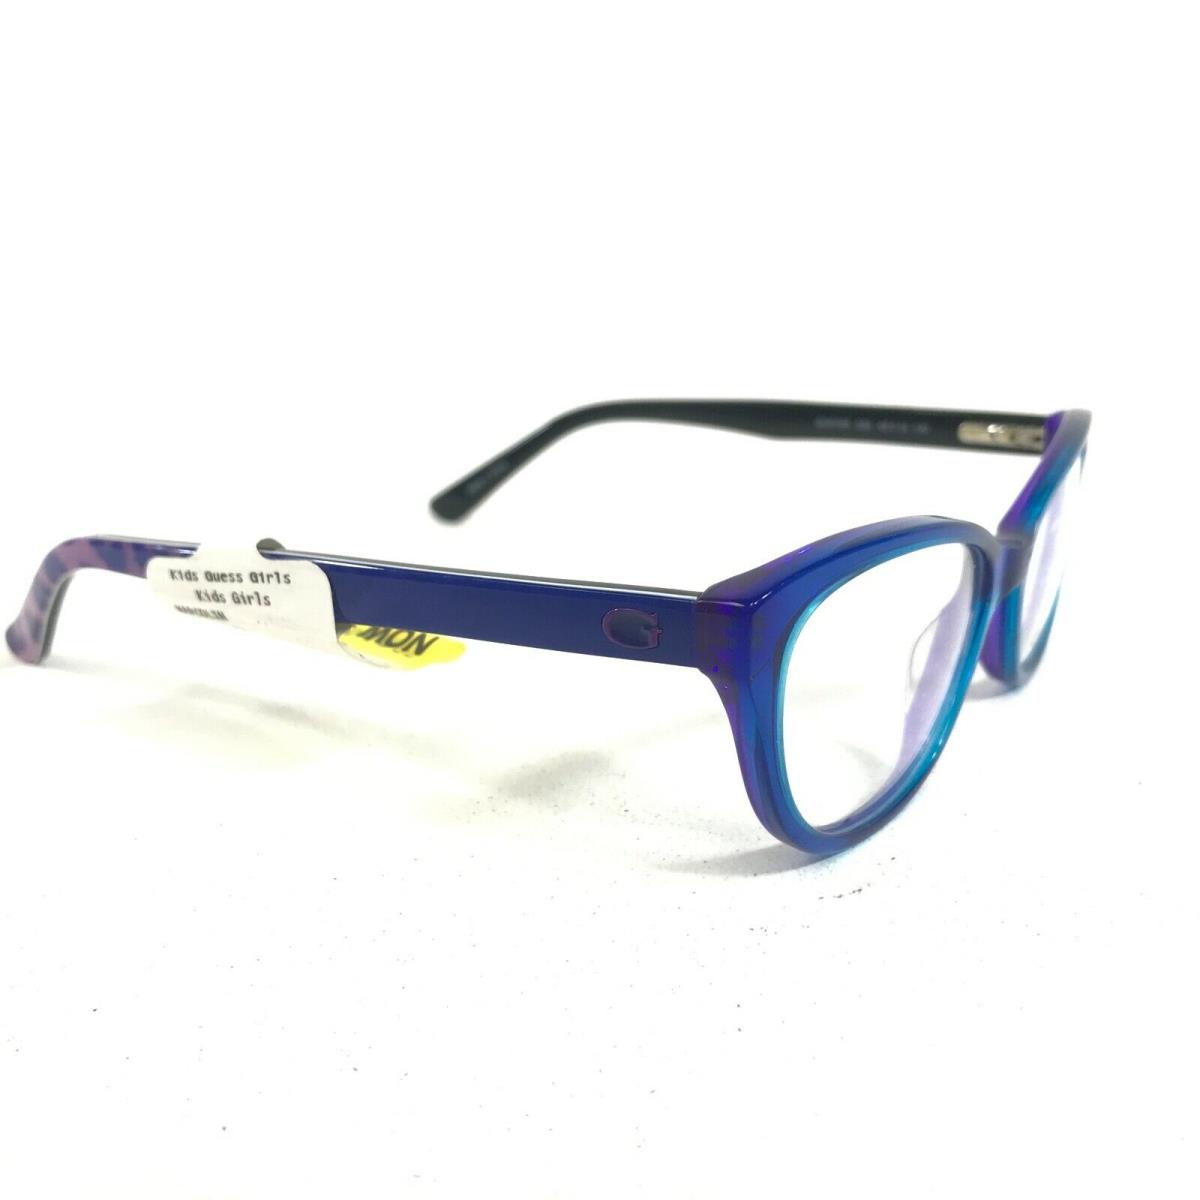 Guess eyeglasses  - Multicolor Frame 1